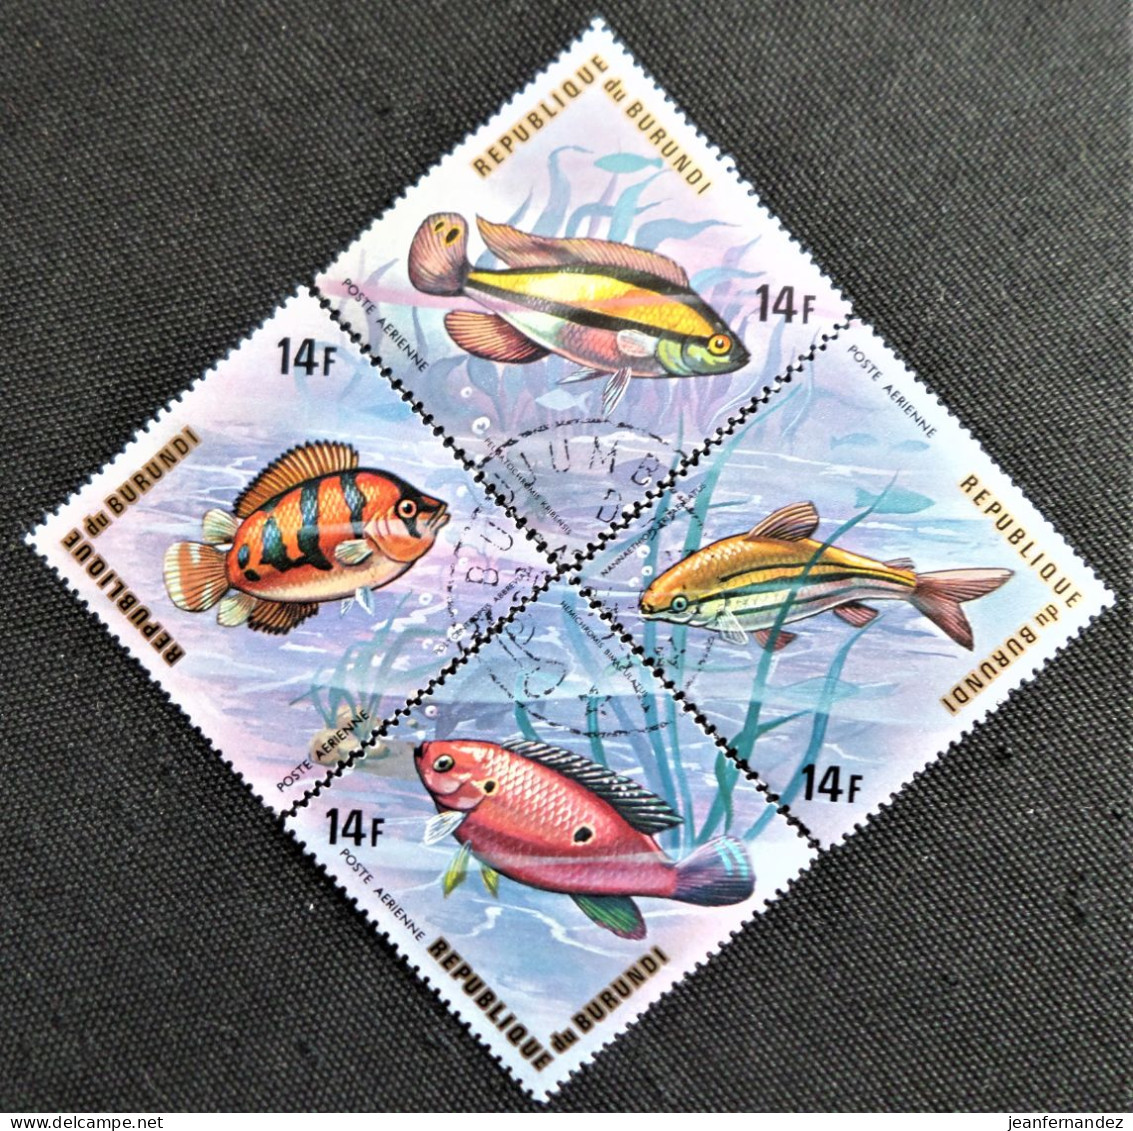 Burundi  1974 Airmail - Fish   Stampworld N° 1099 à 1102 Série Complète - Airmail